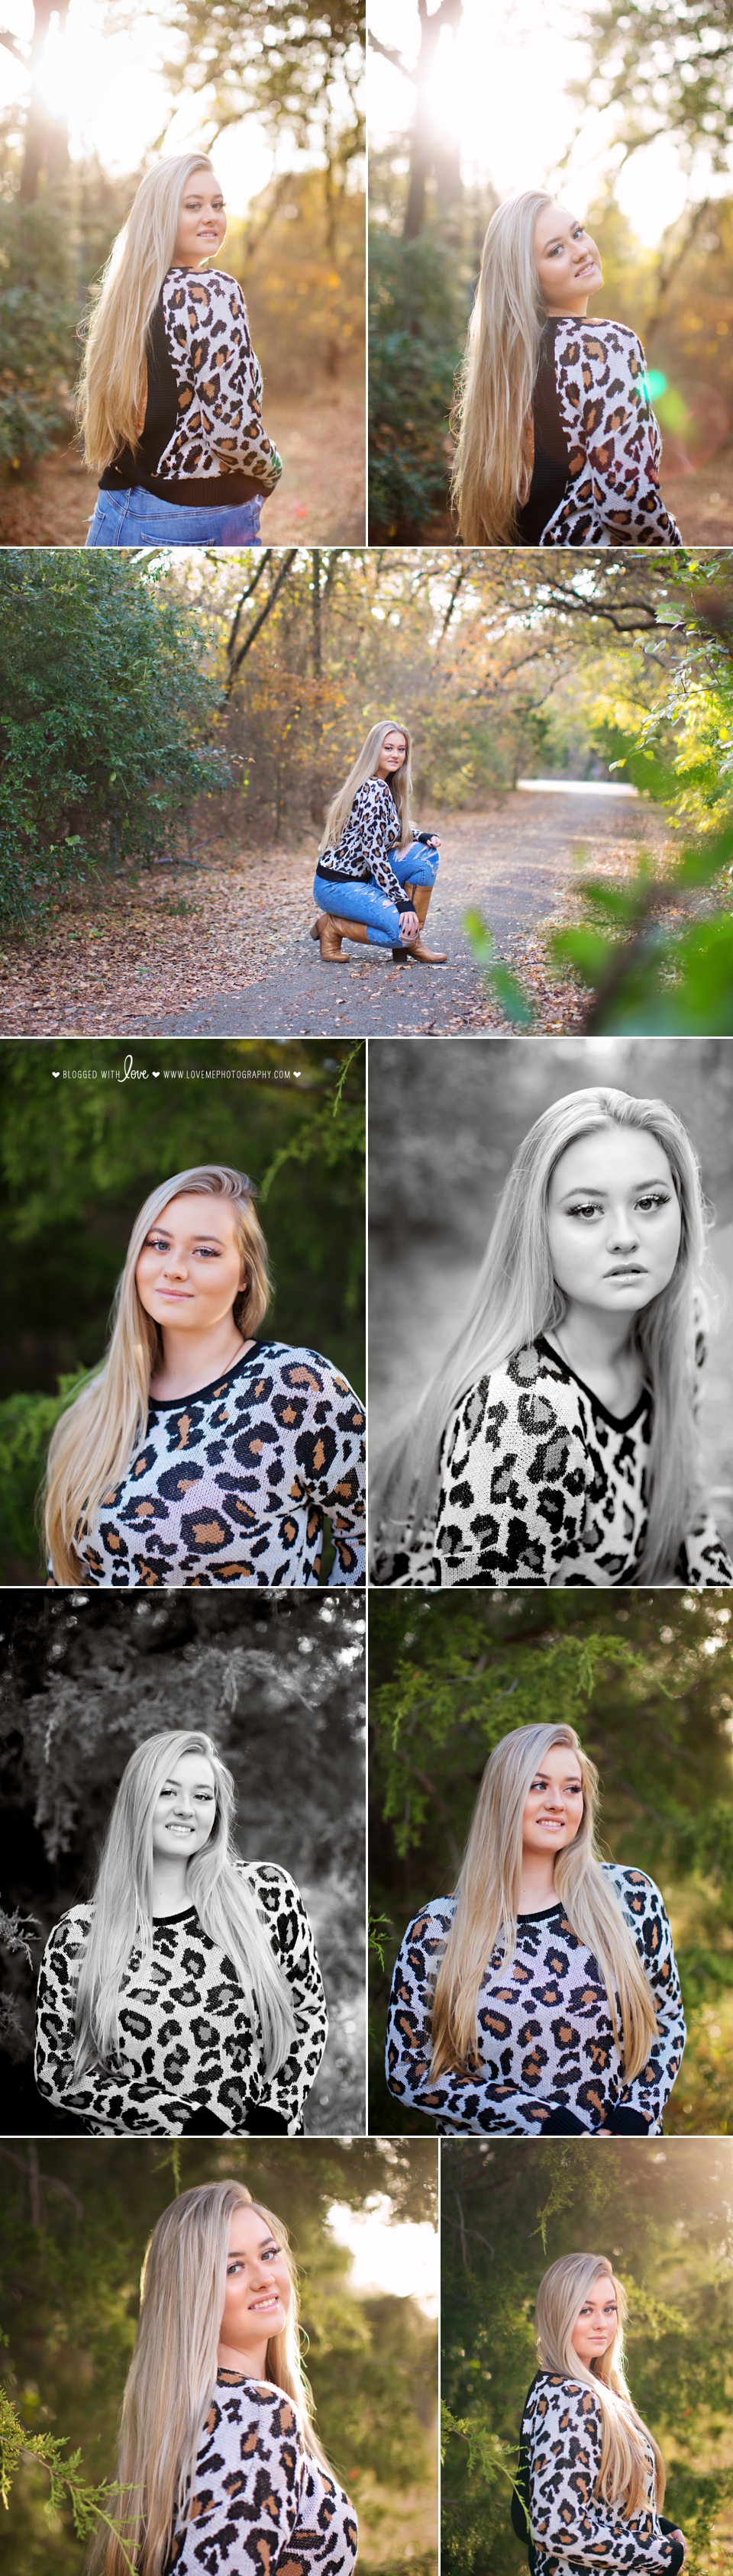 Collage of girl's senior portrait session